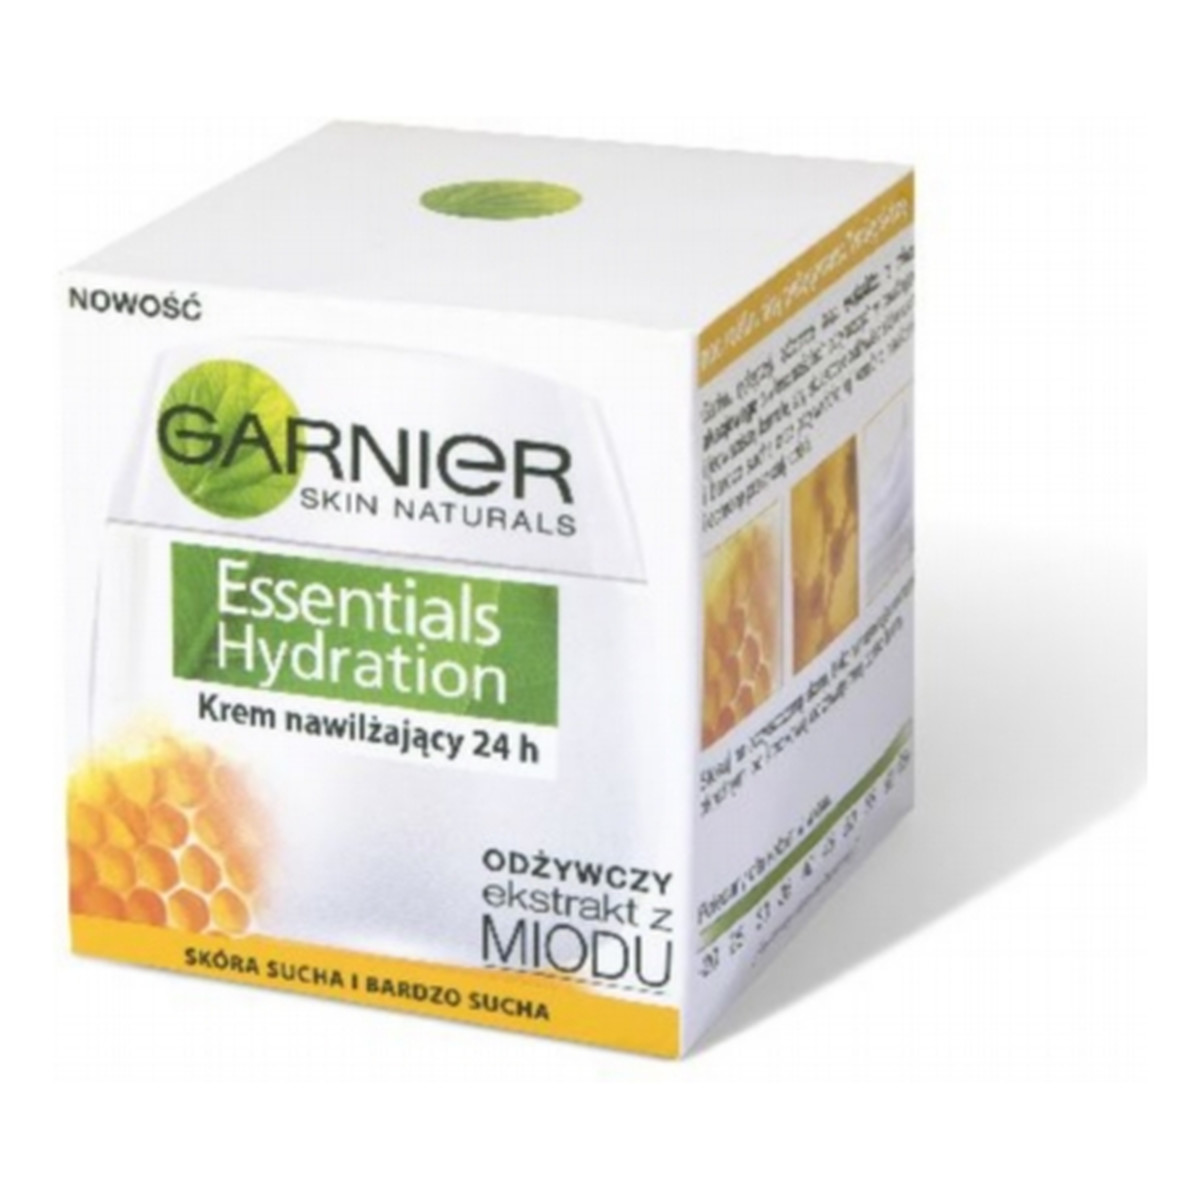 Garnier Essentials Hydration Skin Naturals Krem Nawilżający 24h 50ml